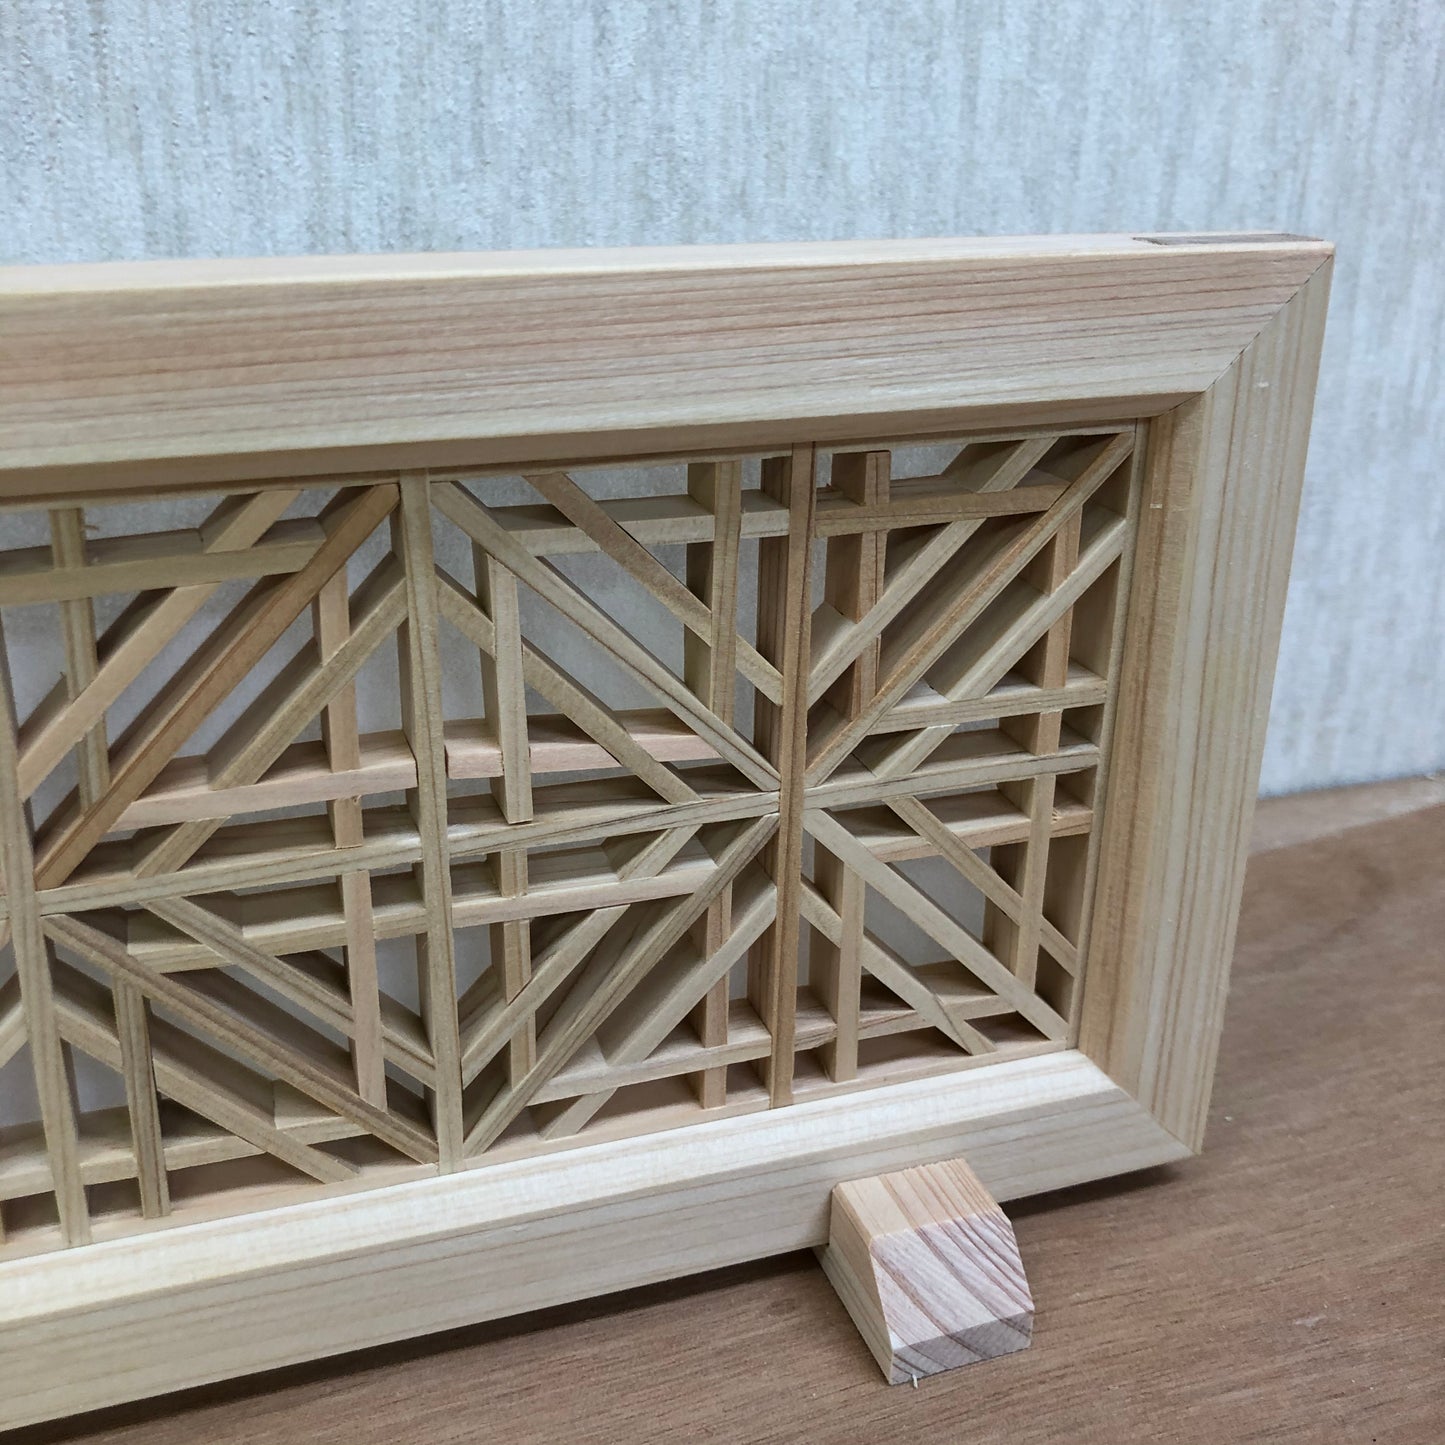 Kumiko work art panel SS pattern 2 Japanese cypress with dedicated stand